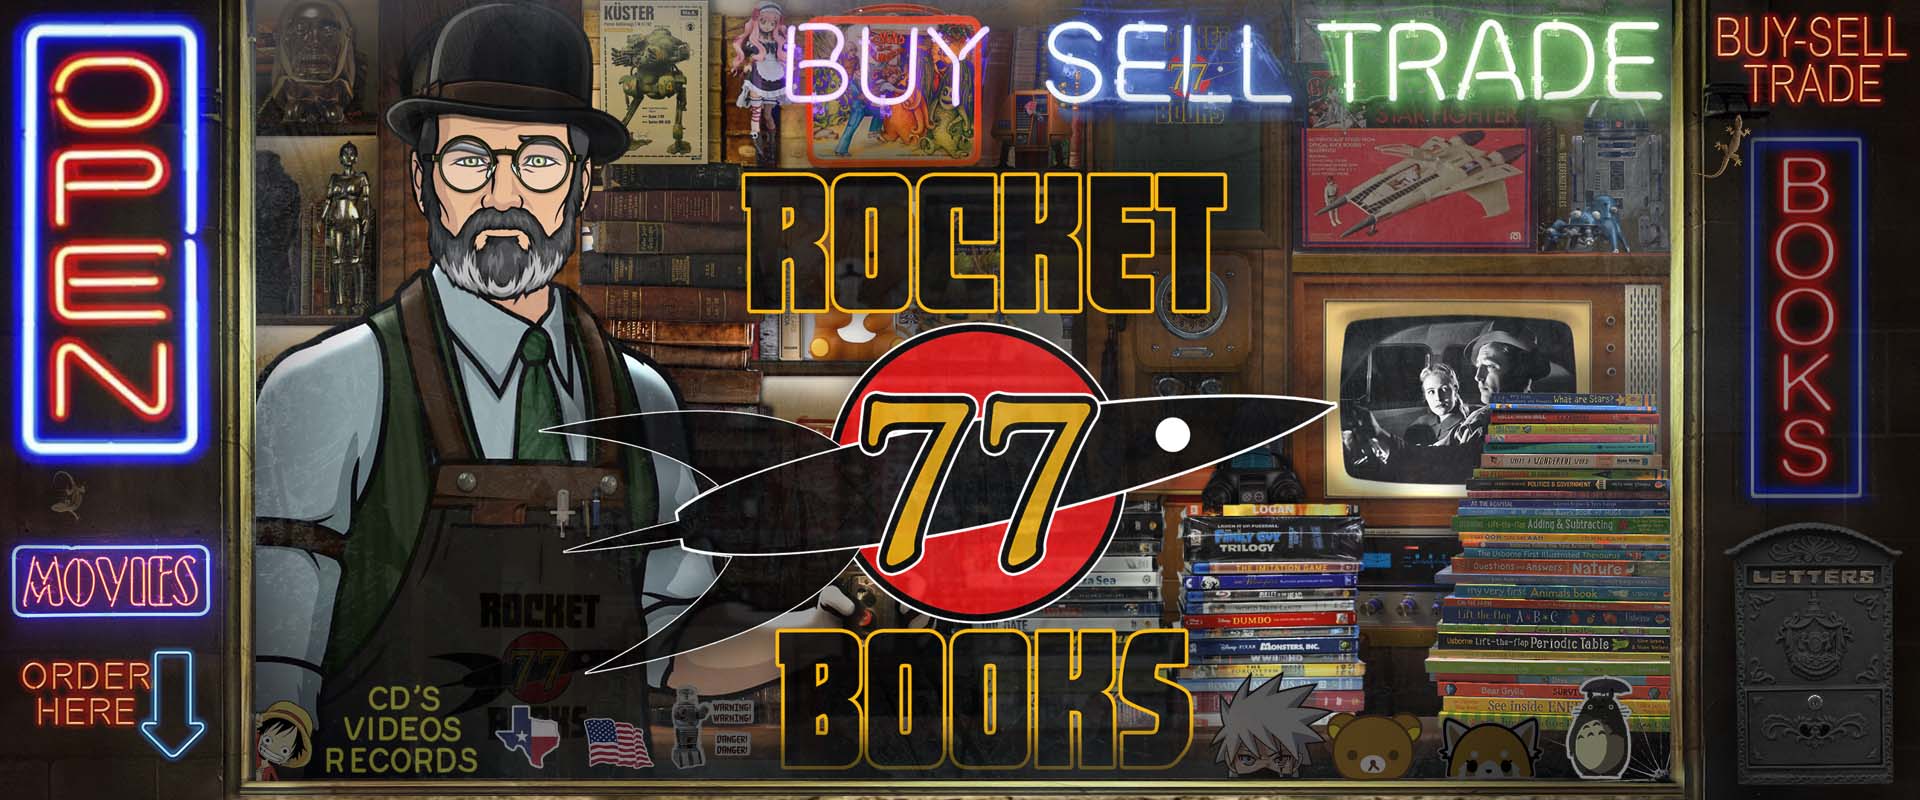 Rocket 77 Books